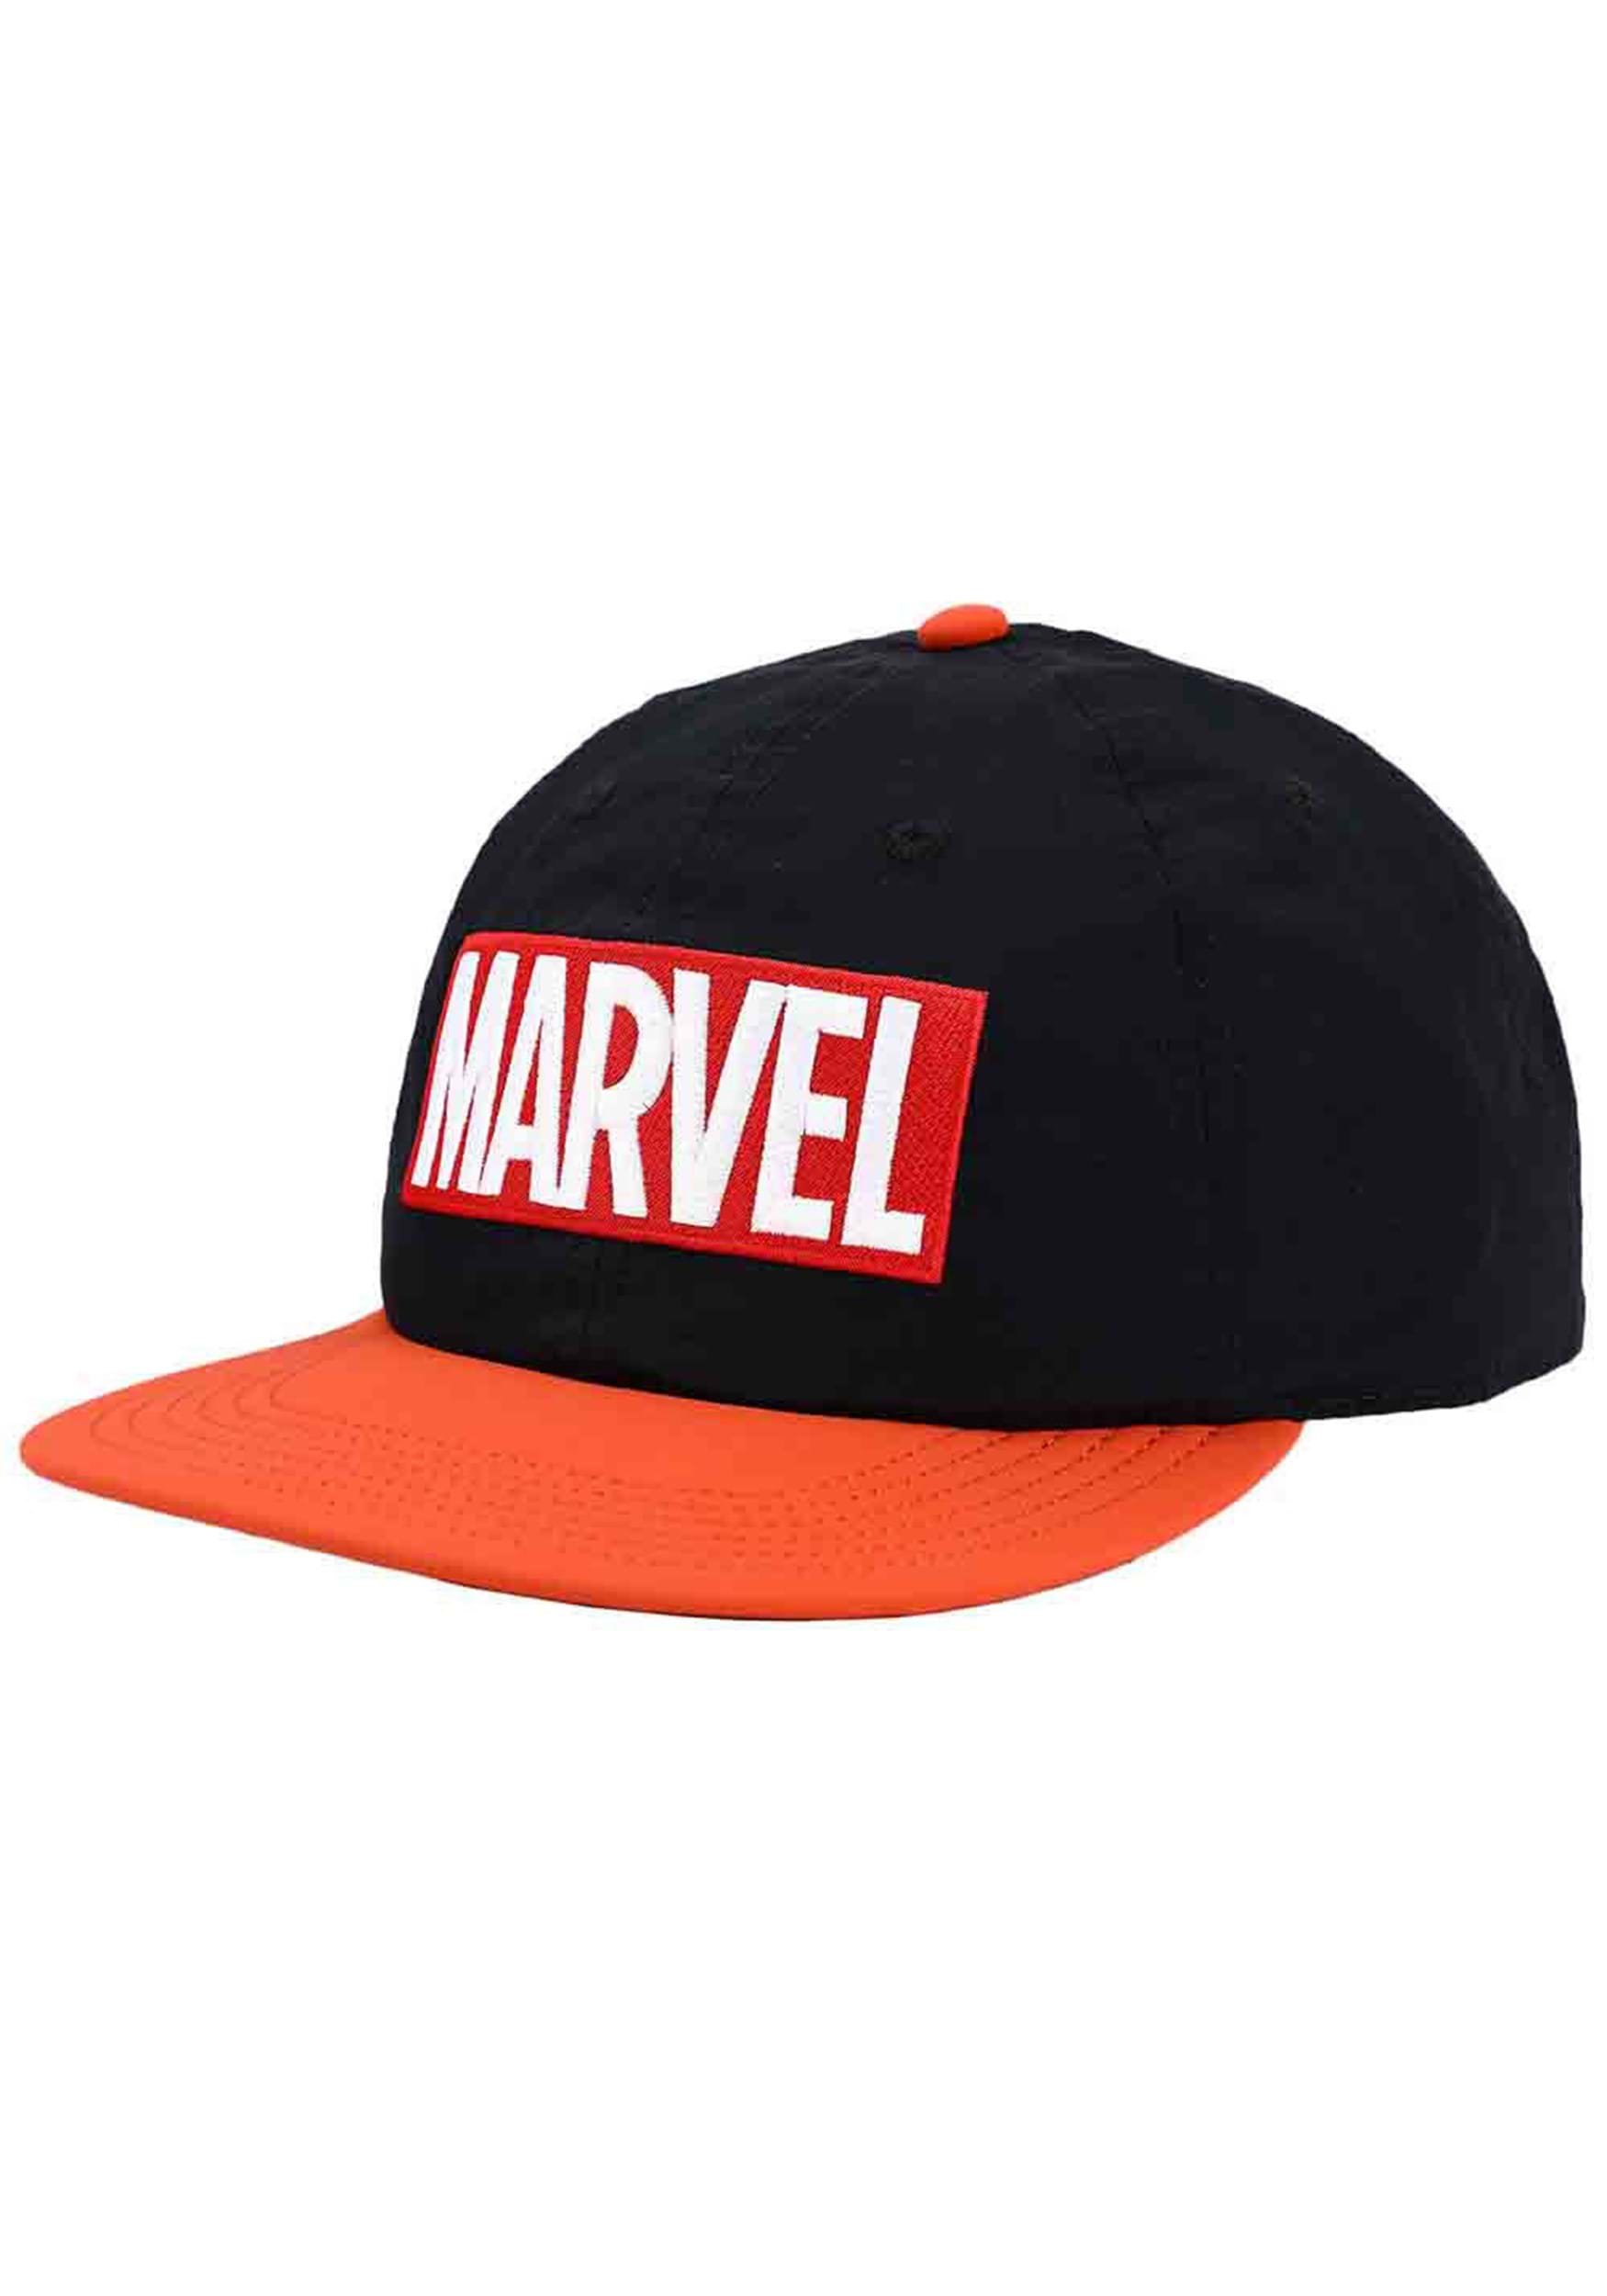 Embroidered Logo of Marvel Flat Bill Snapback Hat